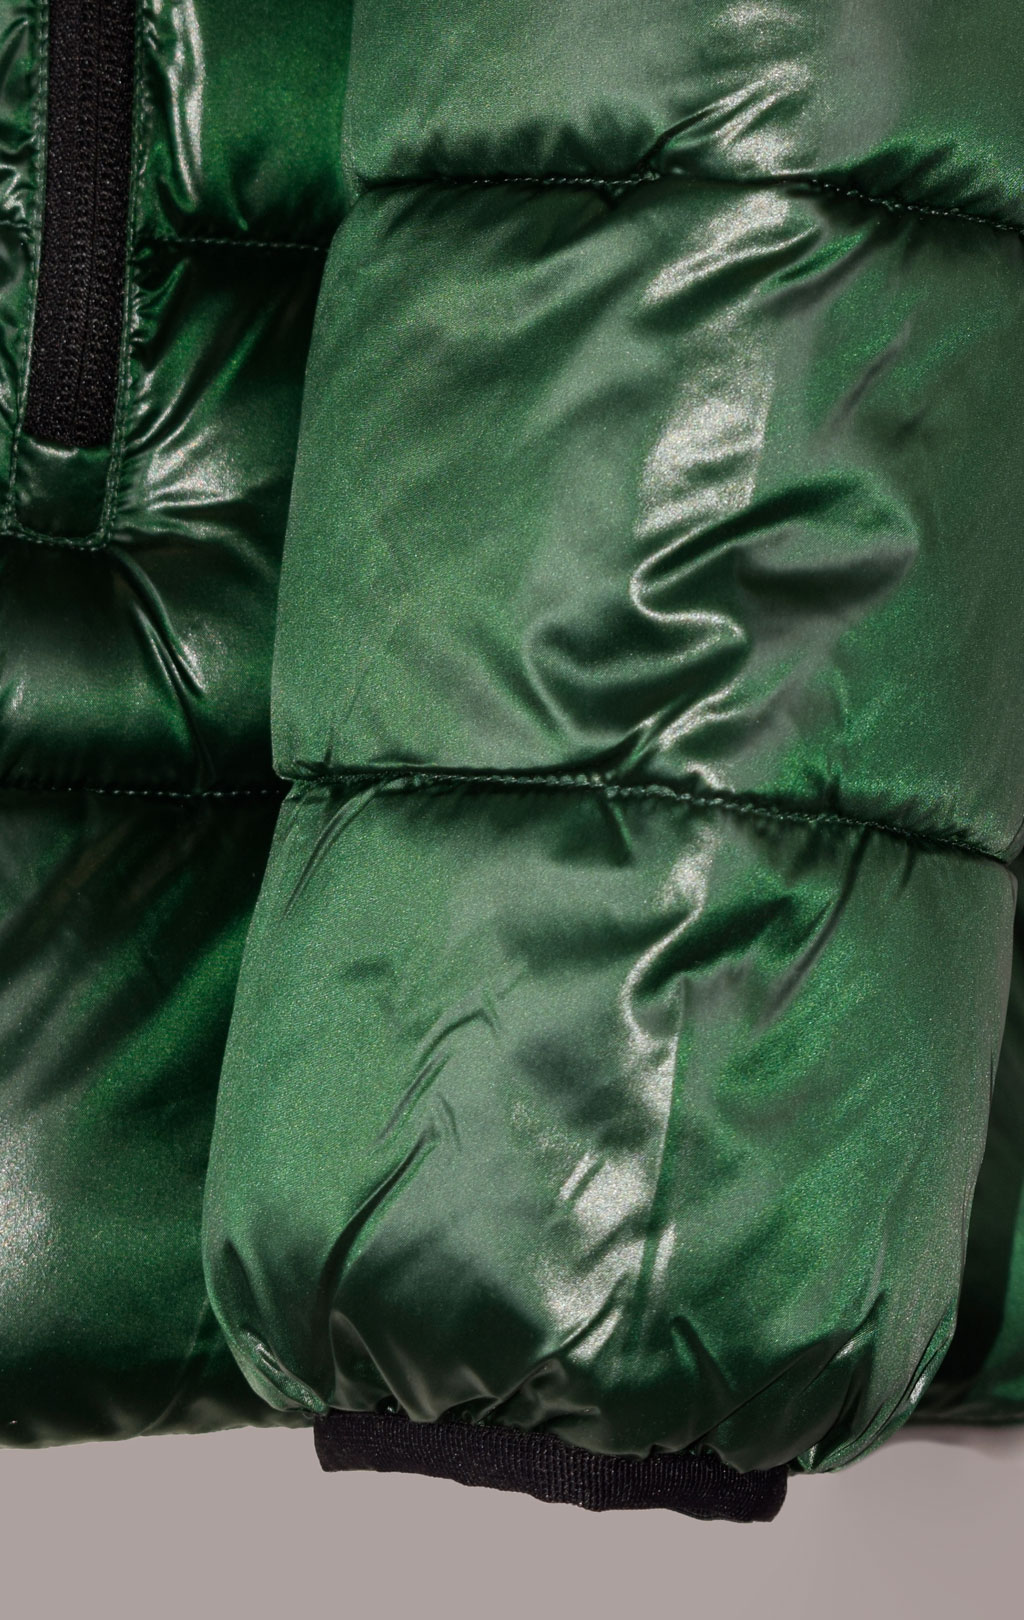 Куртка с капюшоном AERONAUTICA MILITARE big size FW 22/23 m/CN verde scuro (AB 2029) 